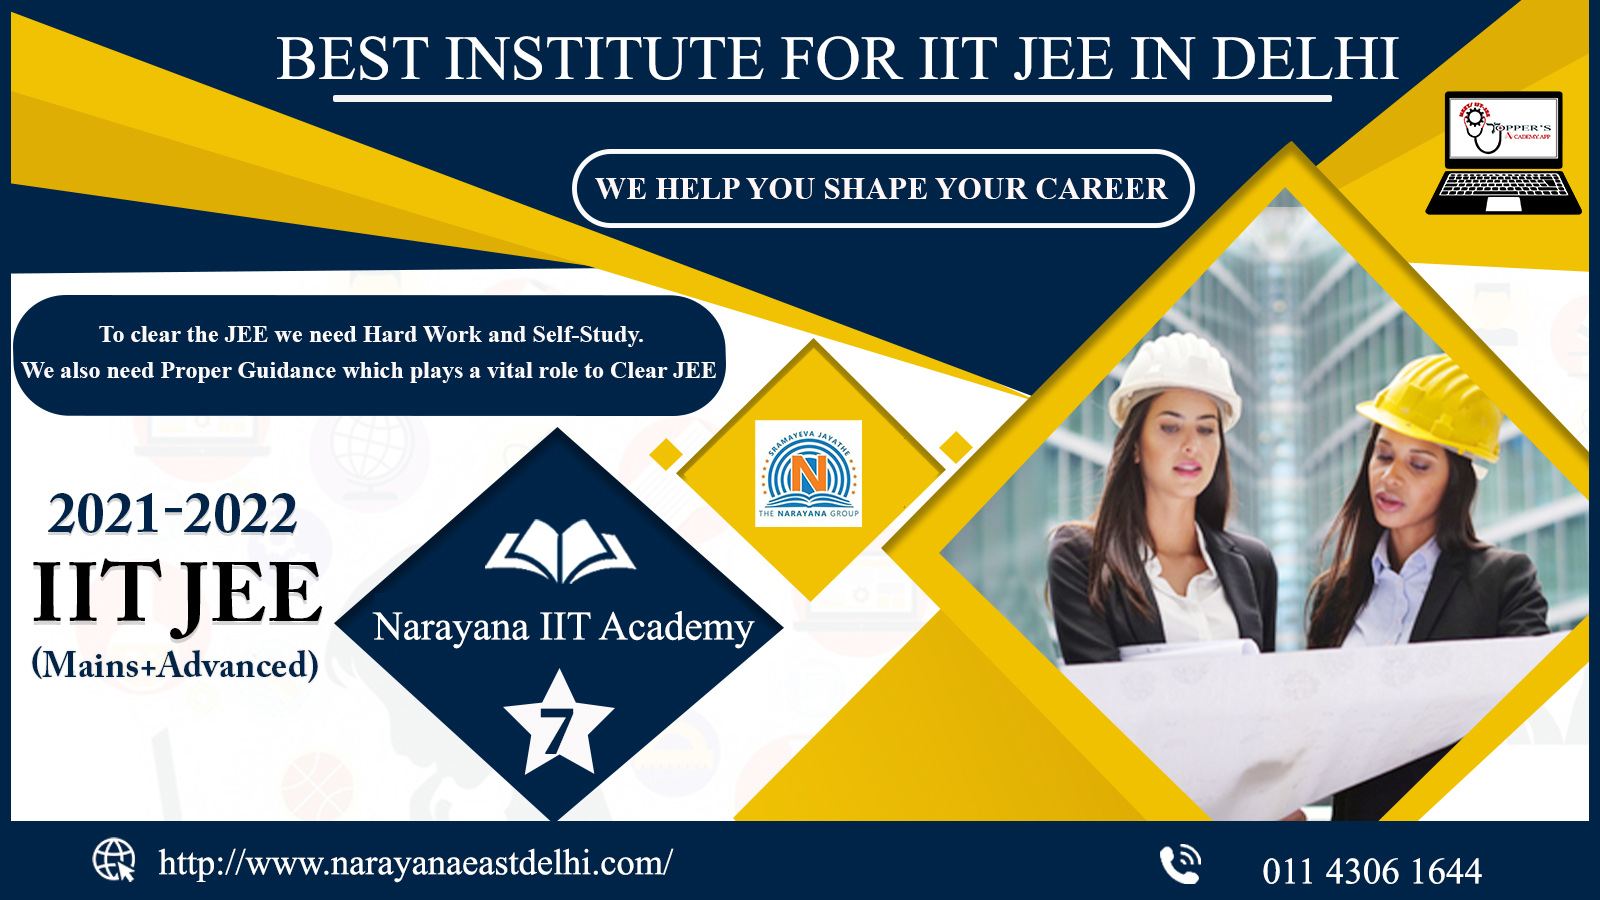 Narayana IIT Academy in Delhi